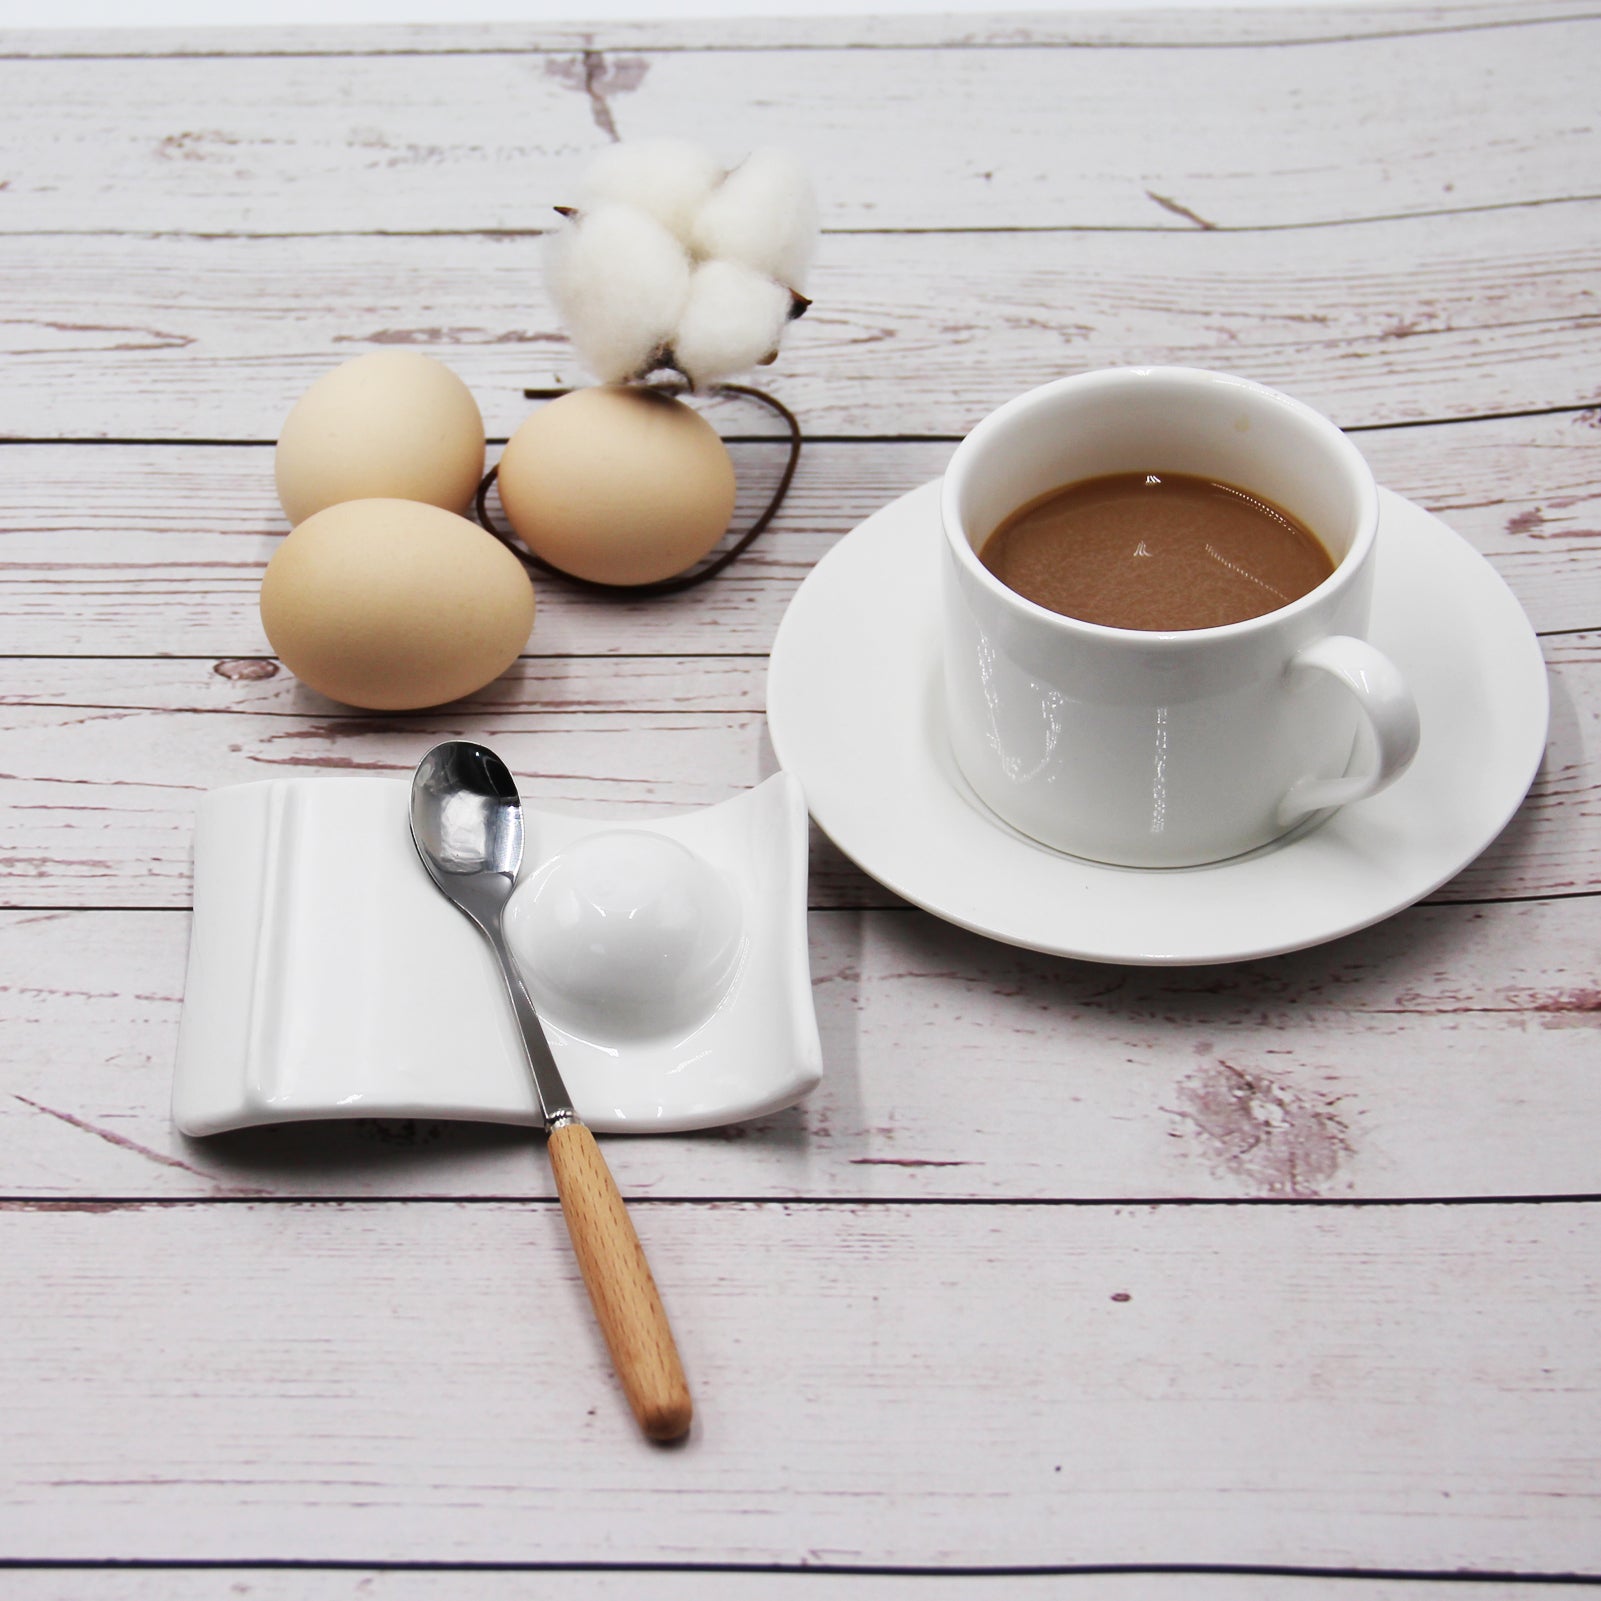 JAMOR White Porcelain Egg Tray,Wave-Shaped Ceramic Egg Cup Plate,Boiled Egg Cup Holder,For Hard And Soft Boiled Eggs,Ceramic Egg Holder For Breakfas